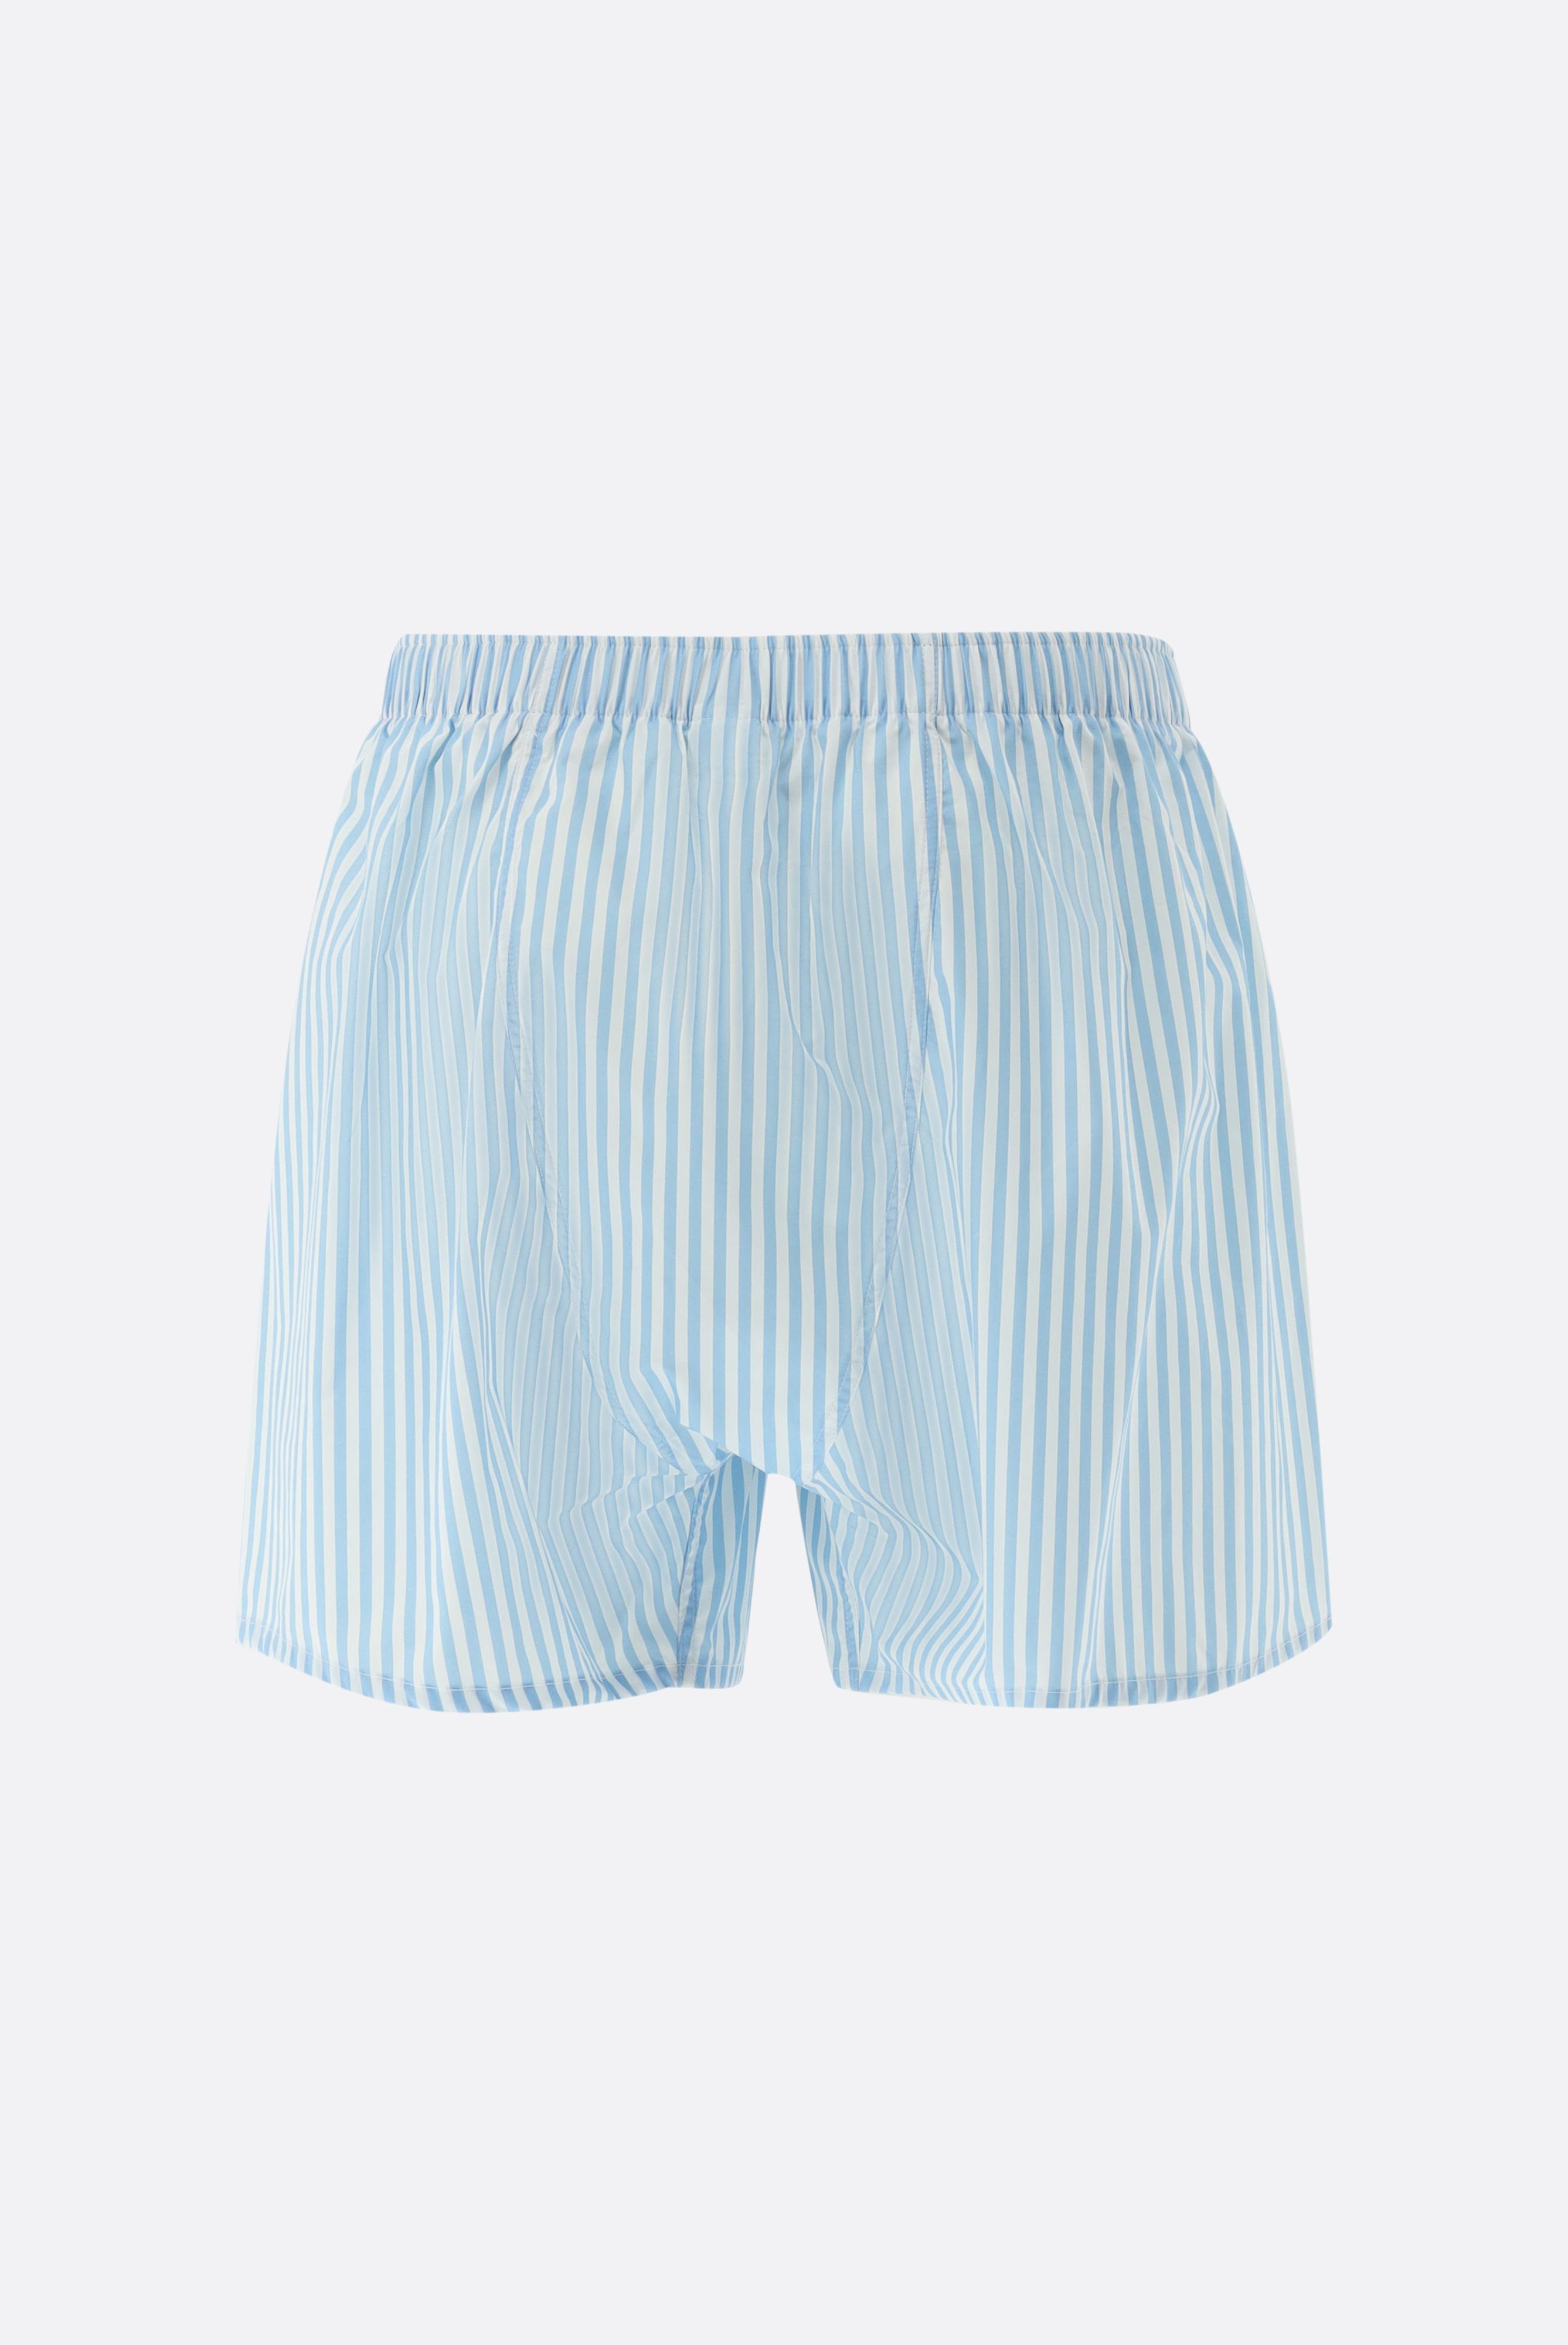 Underwear+Striped Poplin Boxer Shorts+91.1100..170275.740.46